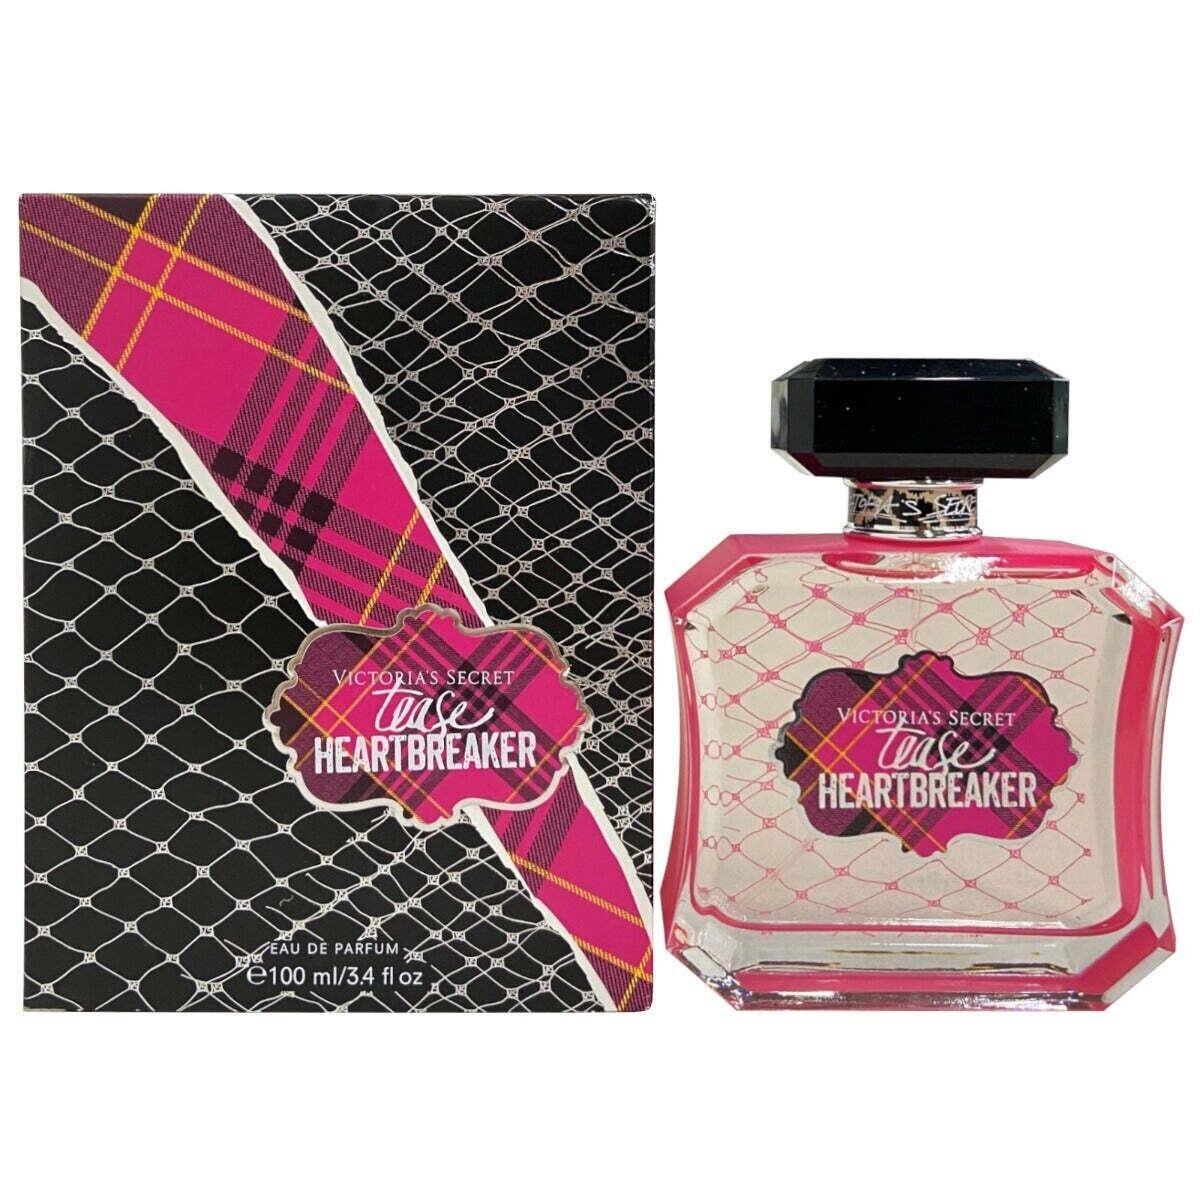 Victoria`s Secret Tease Heartbreaker Perfume Edp 3.4 OZ